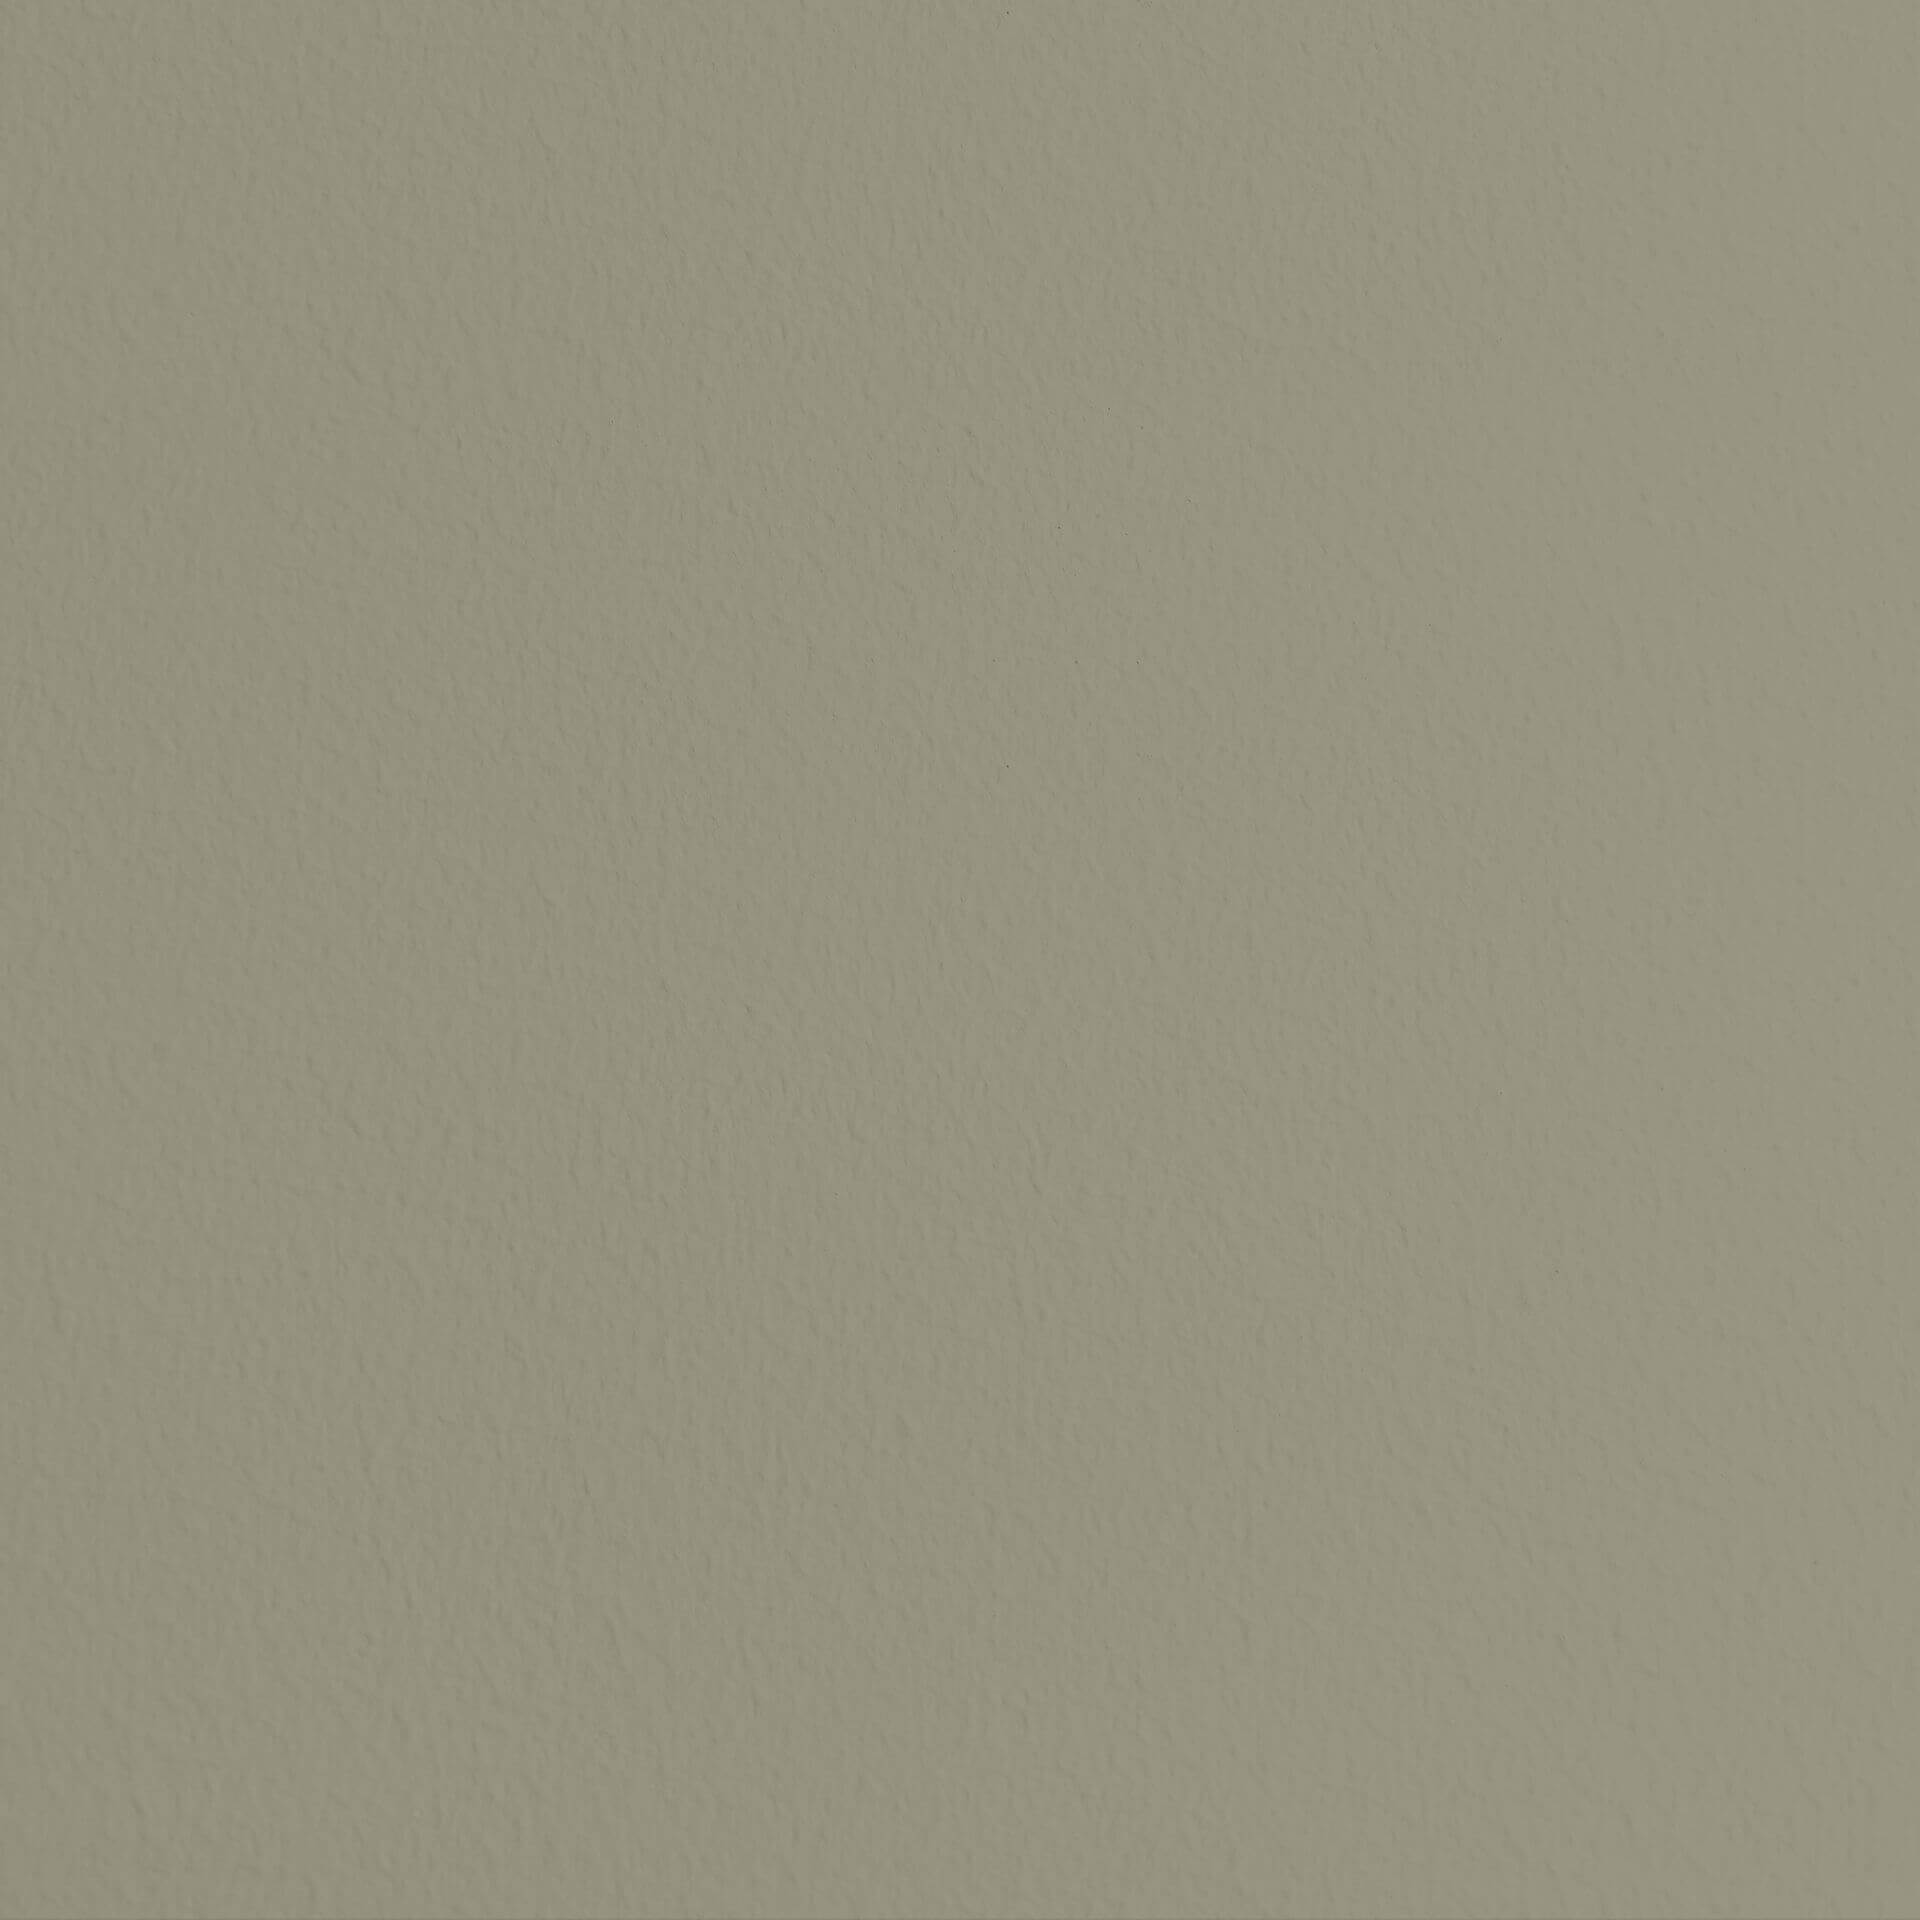 Mylands Empire Grey No. 171 - Marble Matt Emulsion / Wandfarbe, 5L